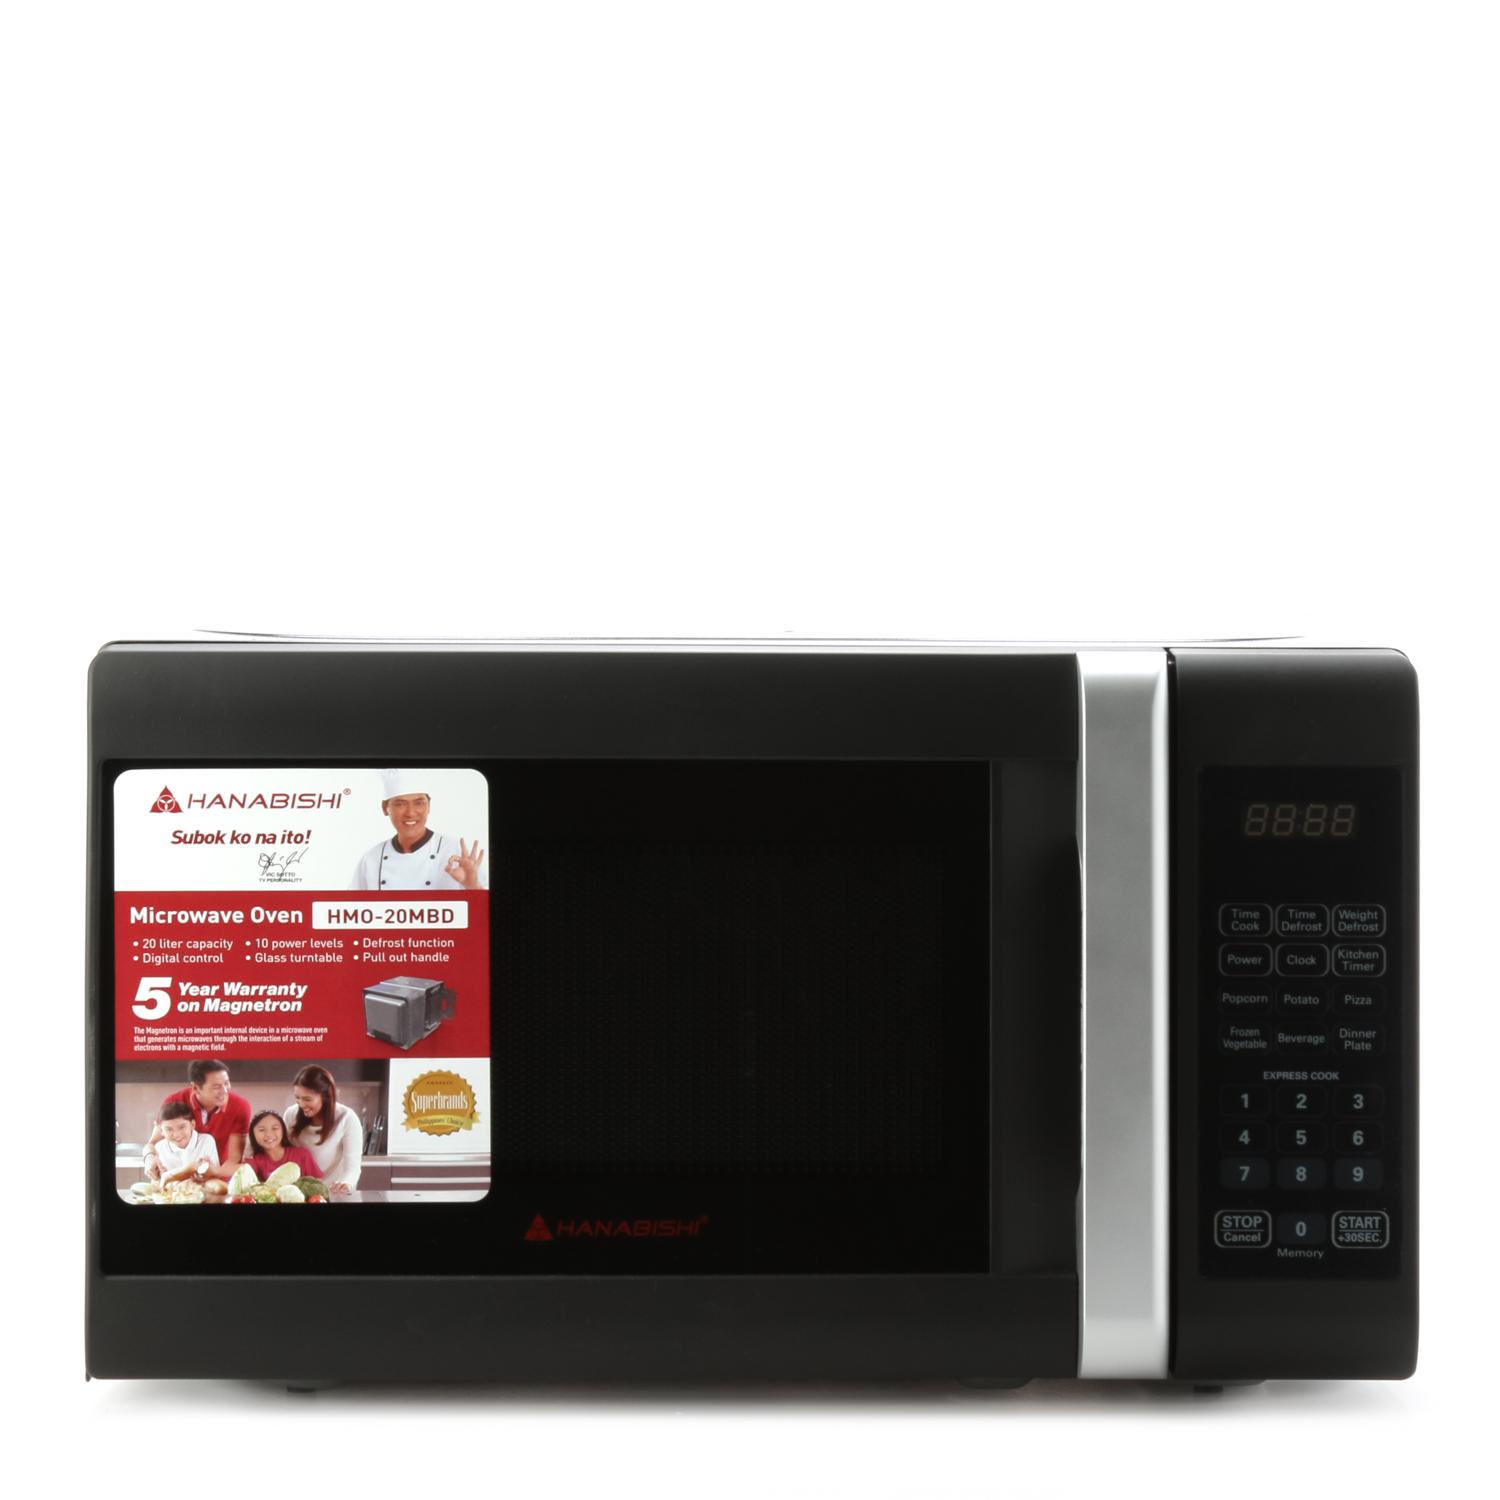 Hanabishi Microwave Oven Review